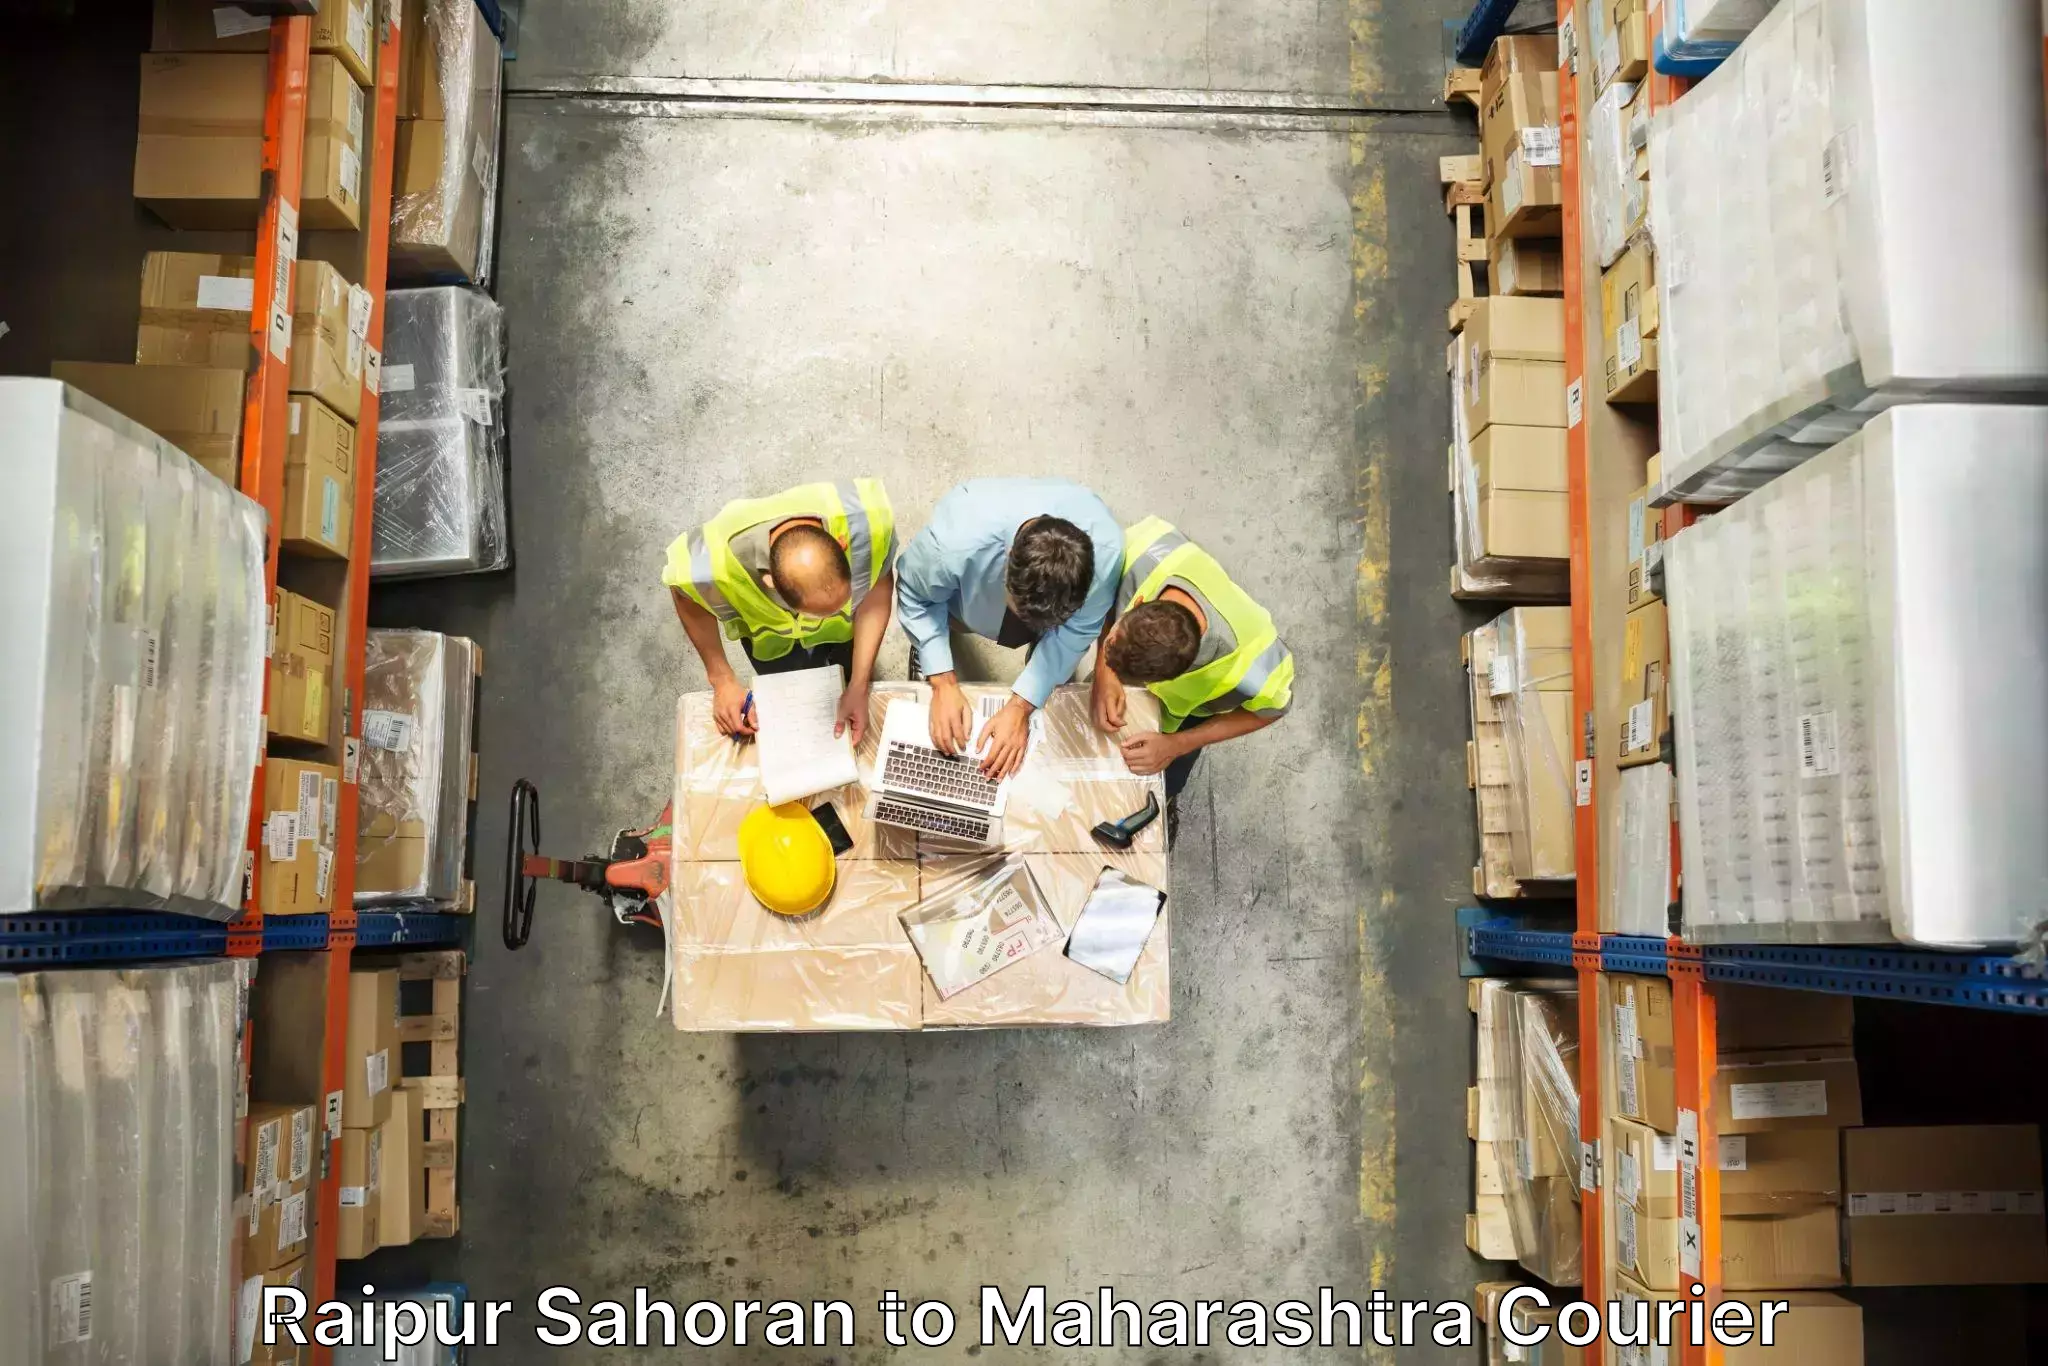 Furniture delivery service Raipur Sahoran to Buldhana